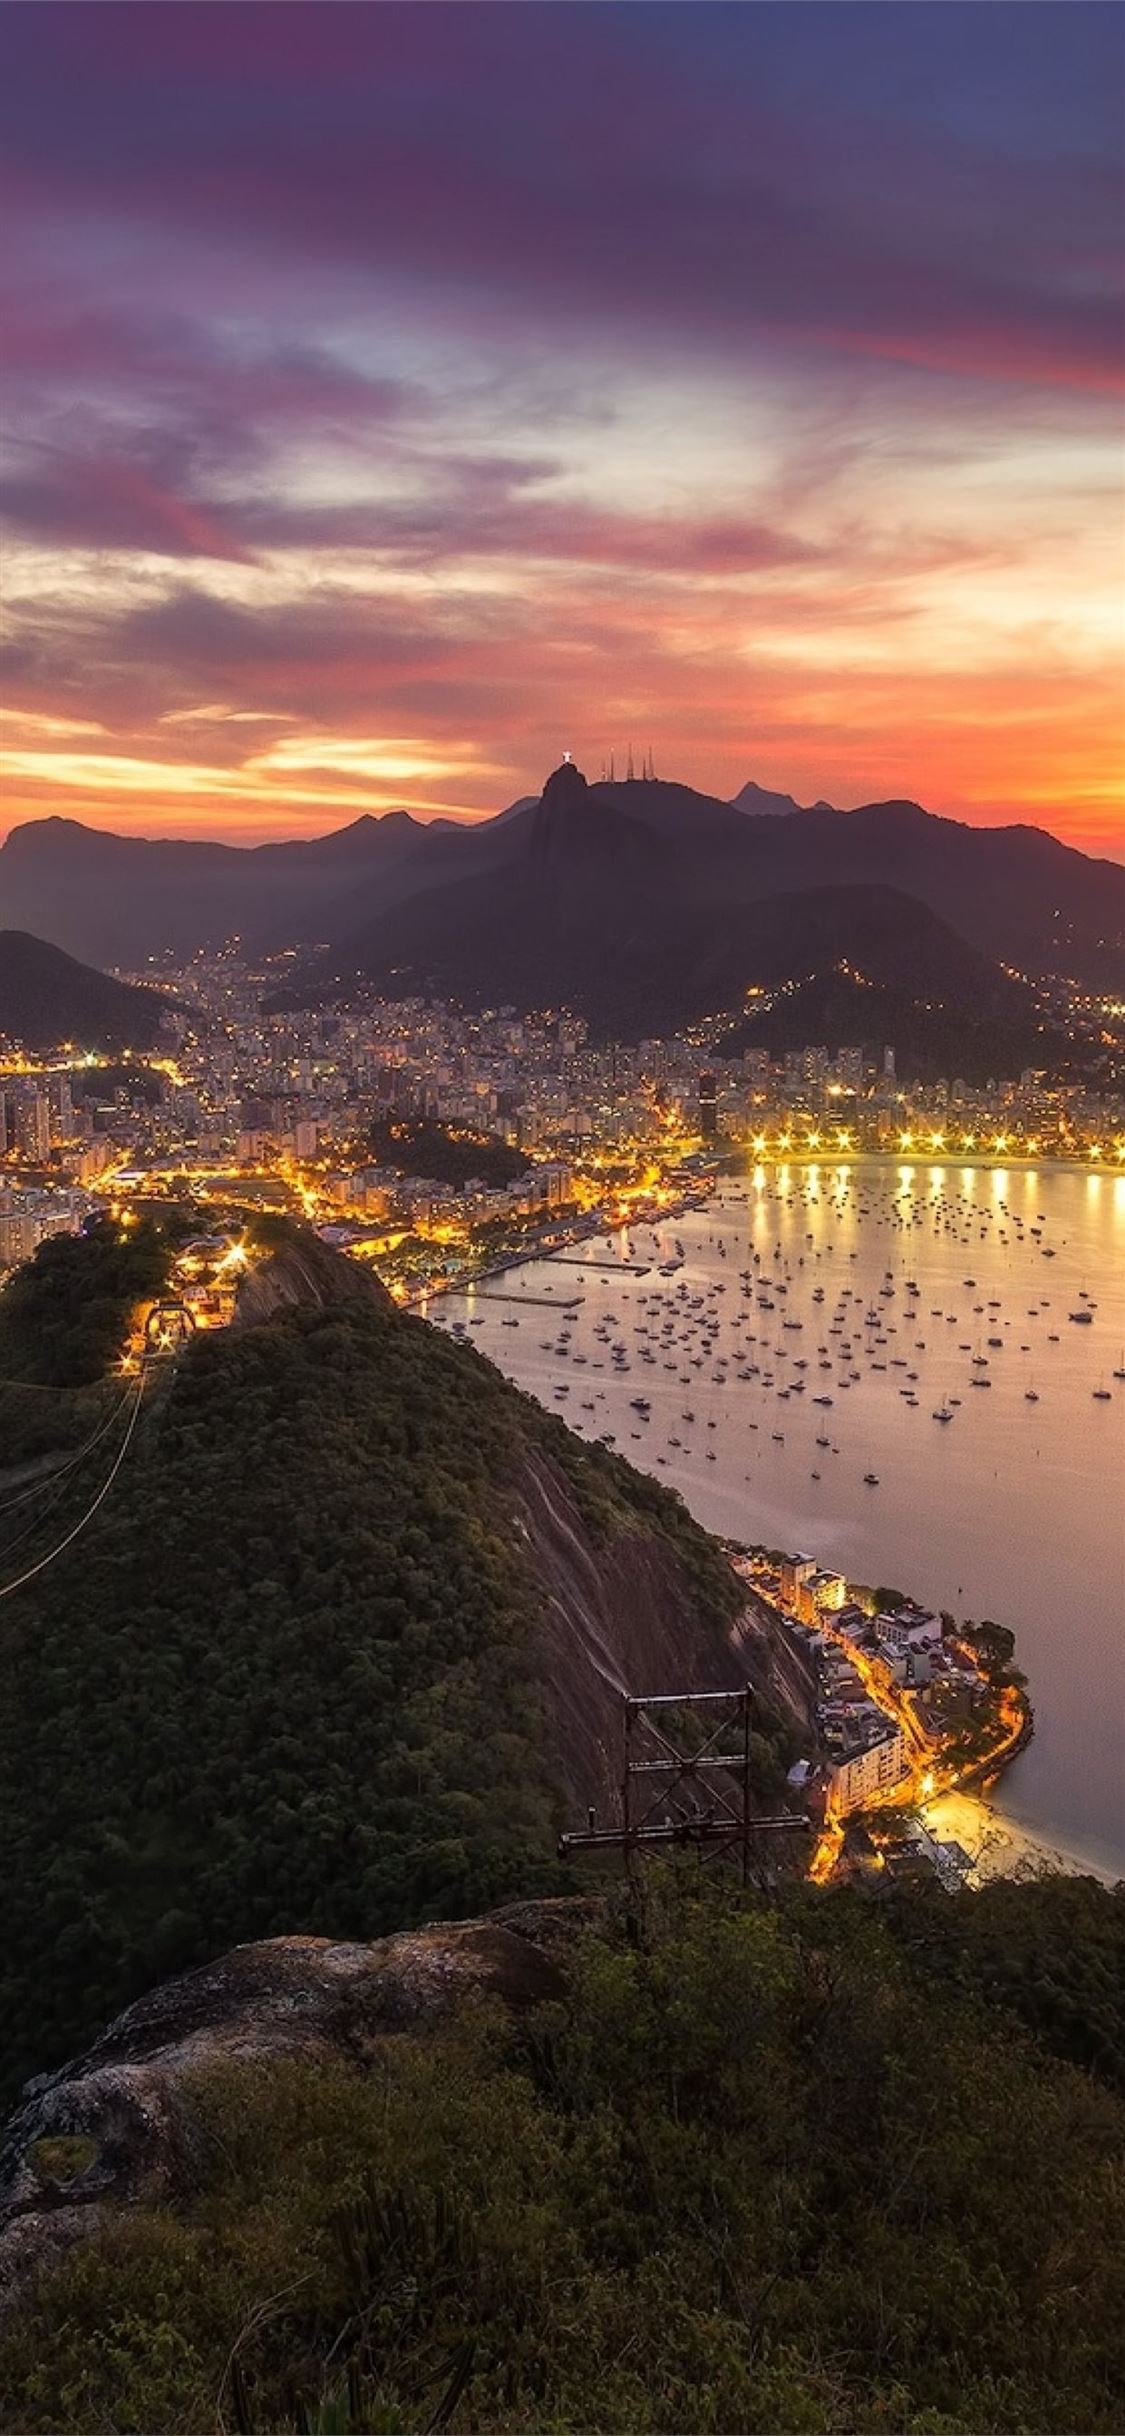 500 Rio De Janeiro Pictures HD  Download Free Images on Unsplash